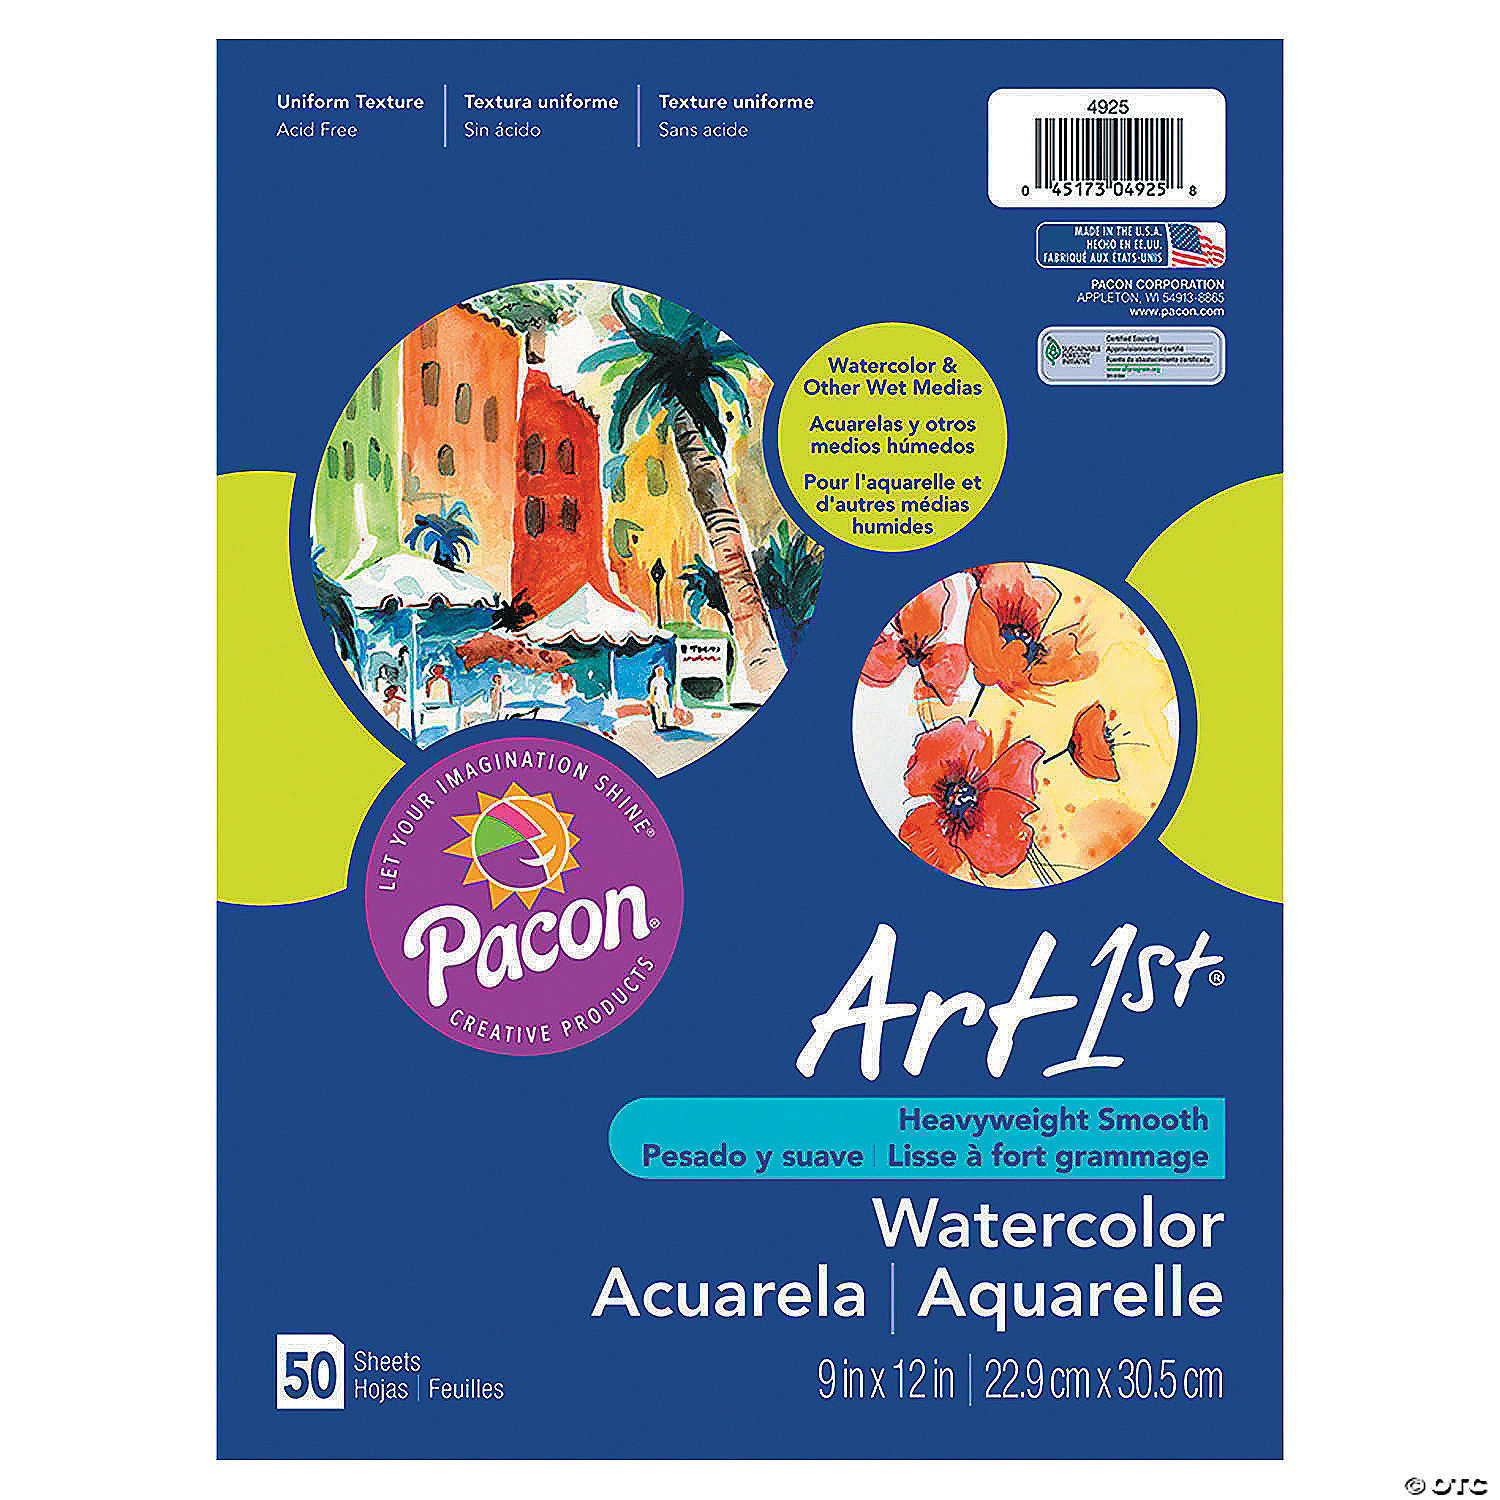 Fingerpaint Paper - Pacon Creative Products